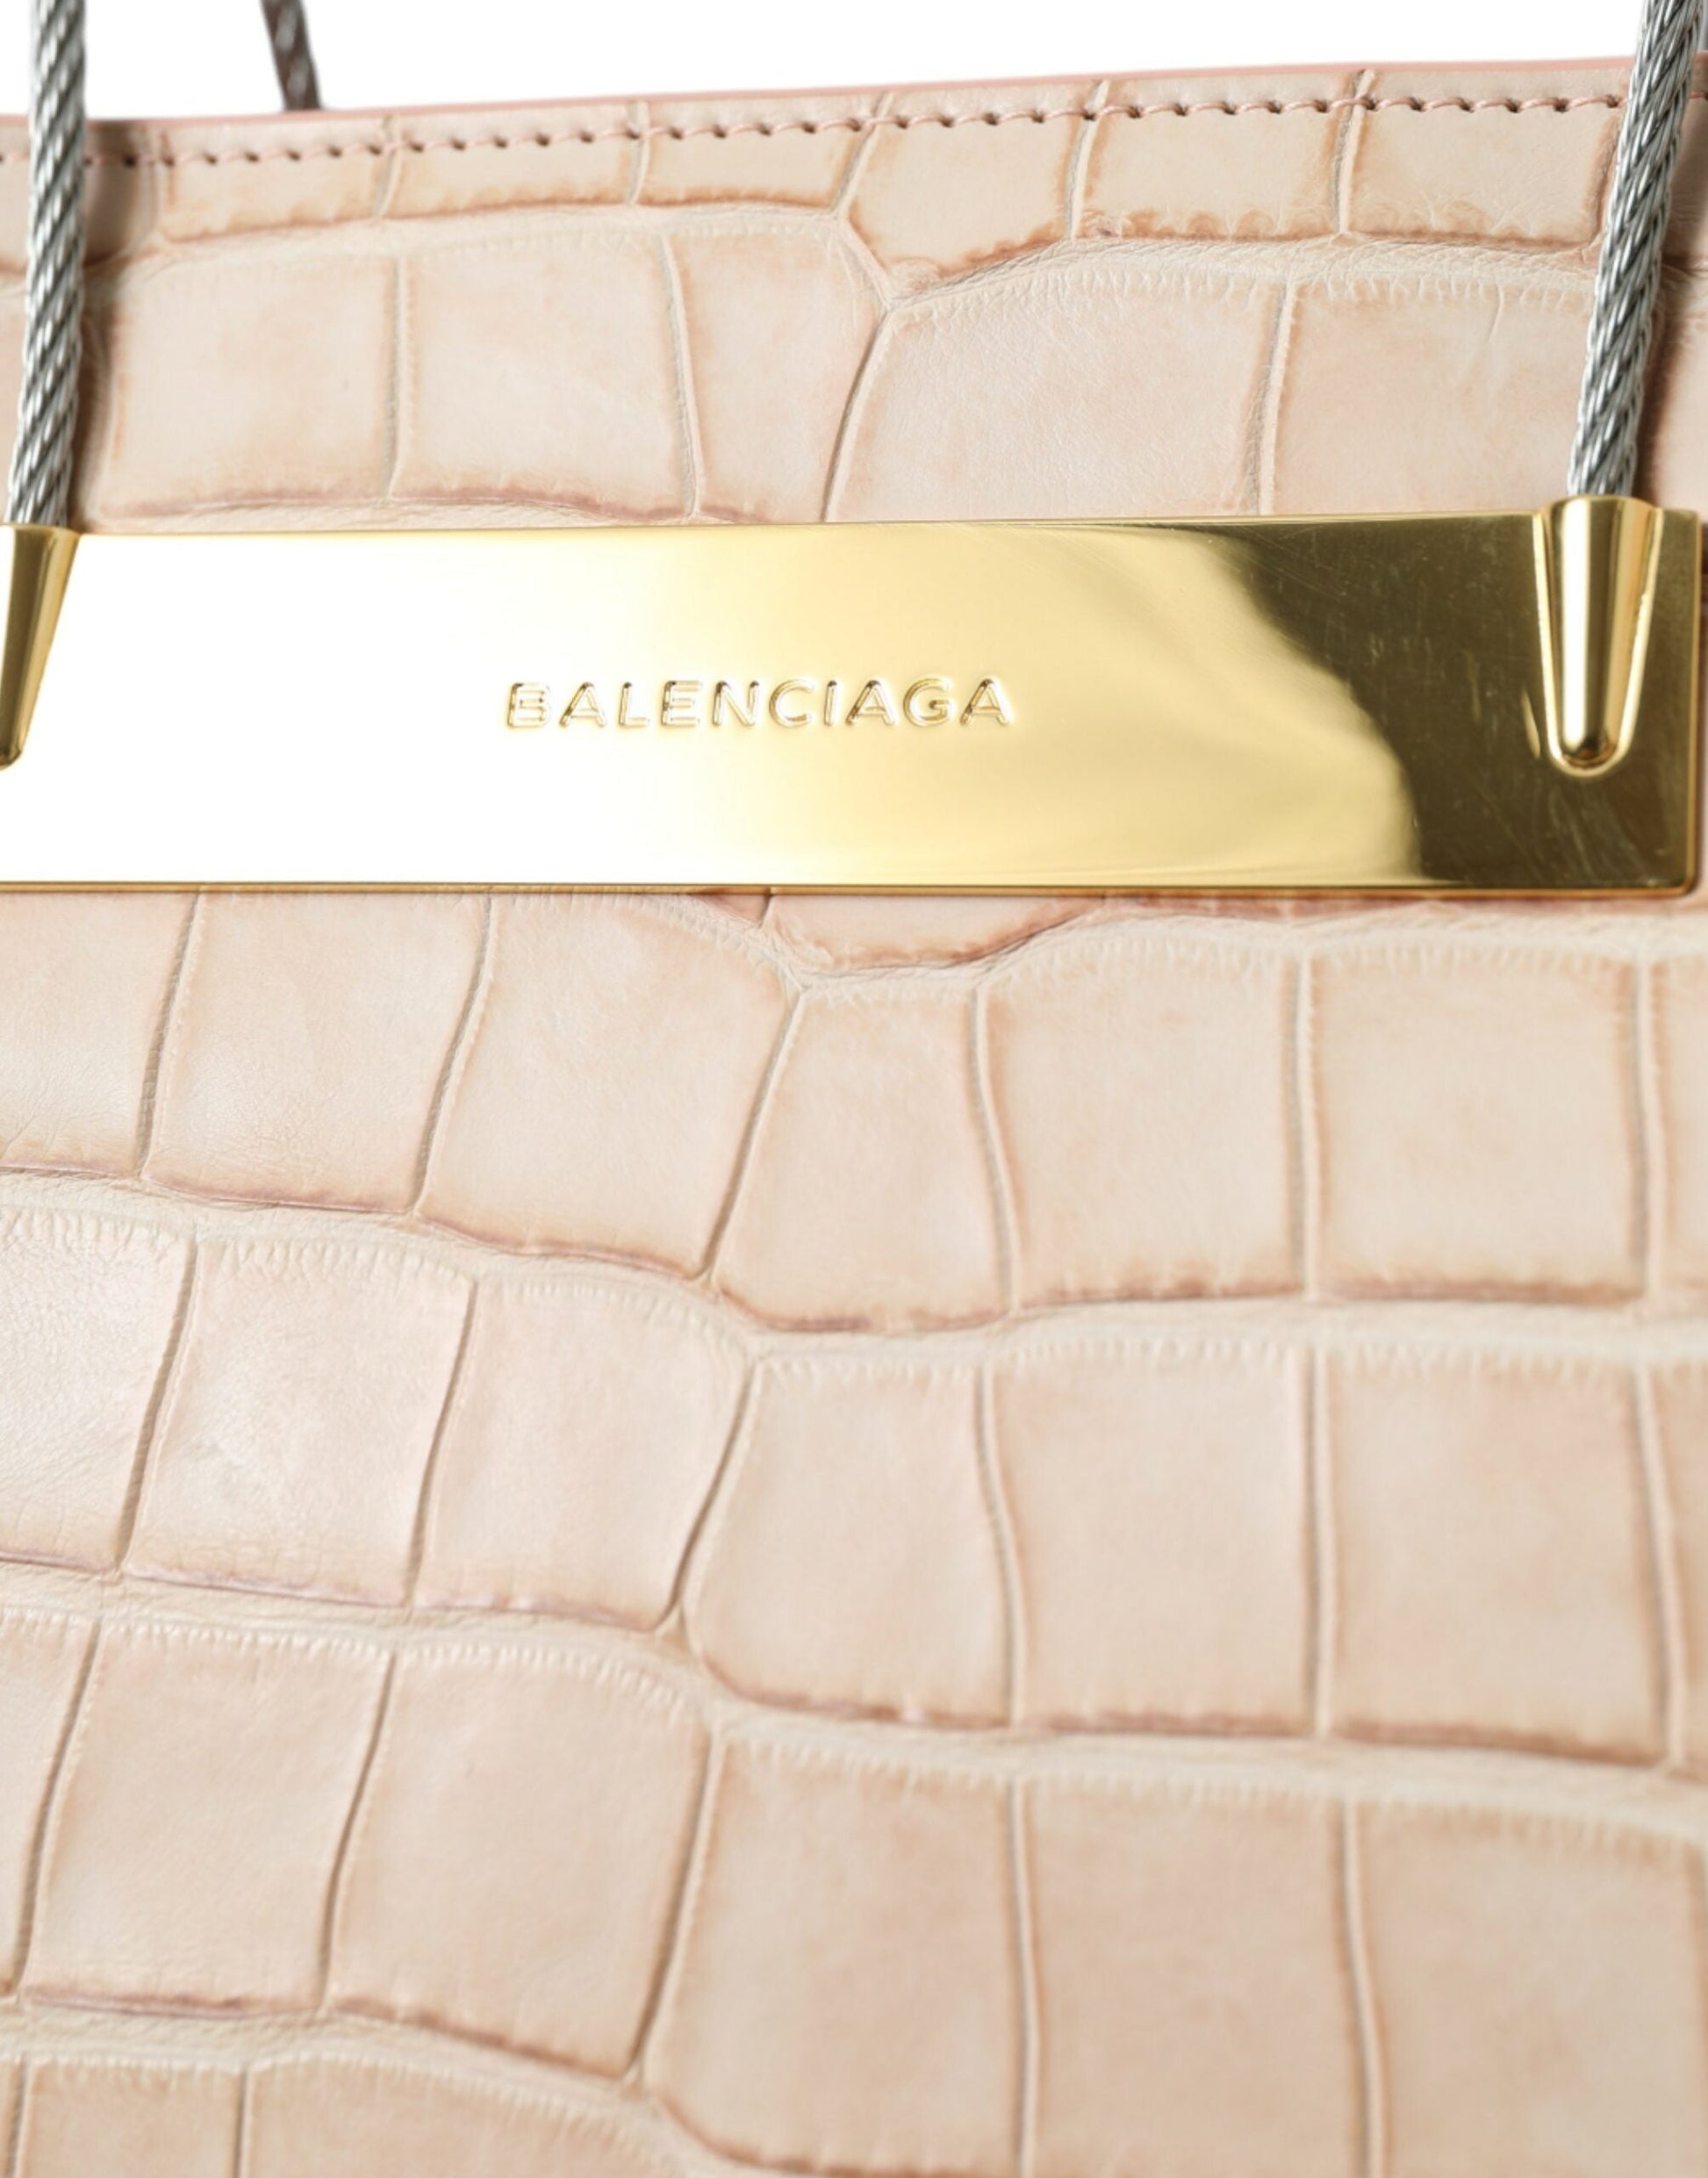 Balenciaga Alligator Leather Chic Pink Tote Bag | Fashionsarah.com